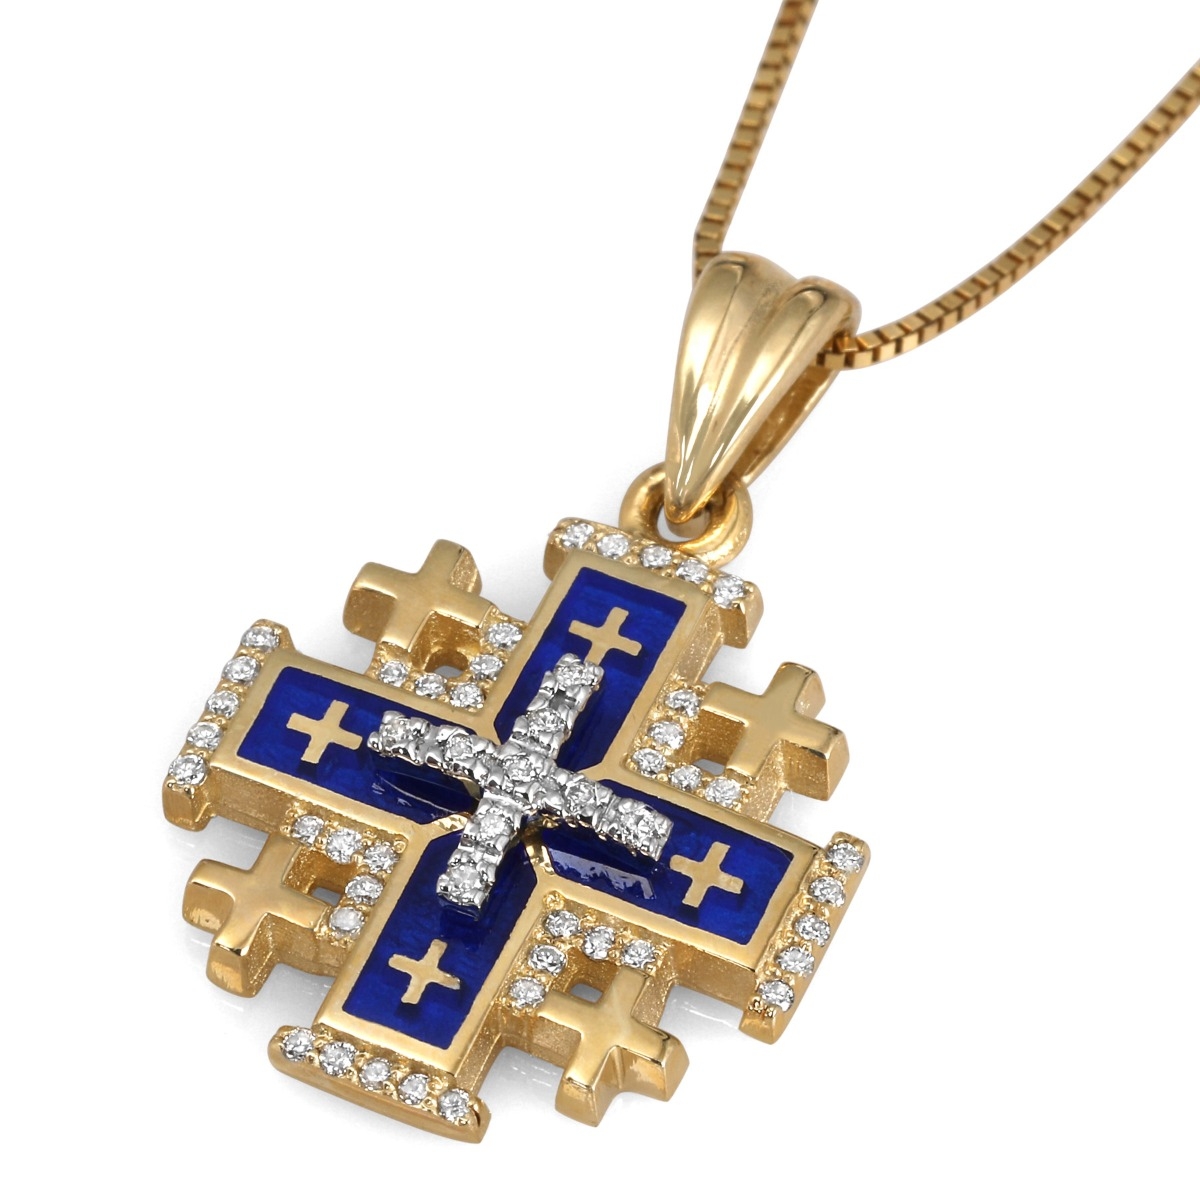 Anbinder Jewelry 14K Yellow Gold and Enamel Classic Jerusalem Cross Pendant with 49 Diamonds - 1